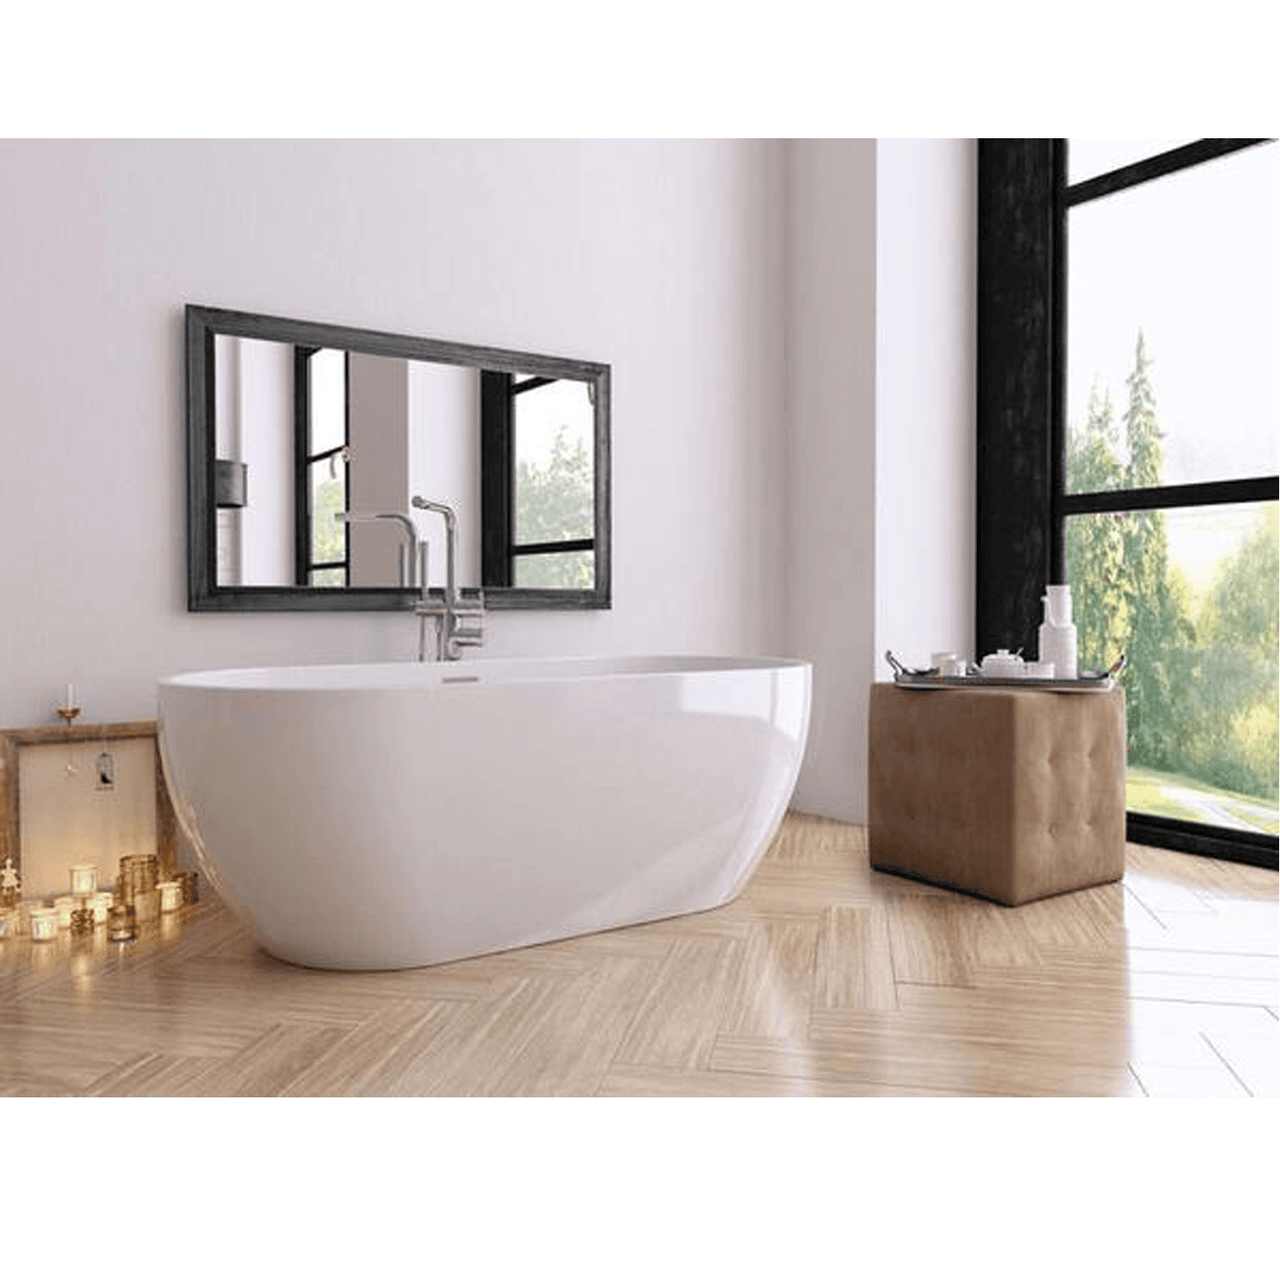 Latoscana Perlato Venezia 66" Freestanding Soaker Tub bathtub and showerhead faucet systems Latoscana 